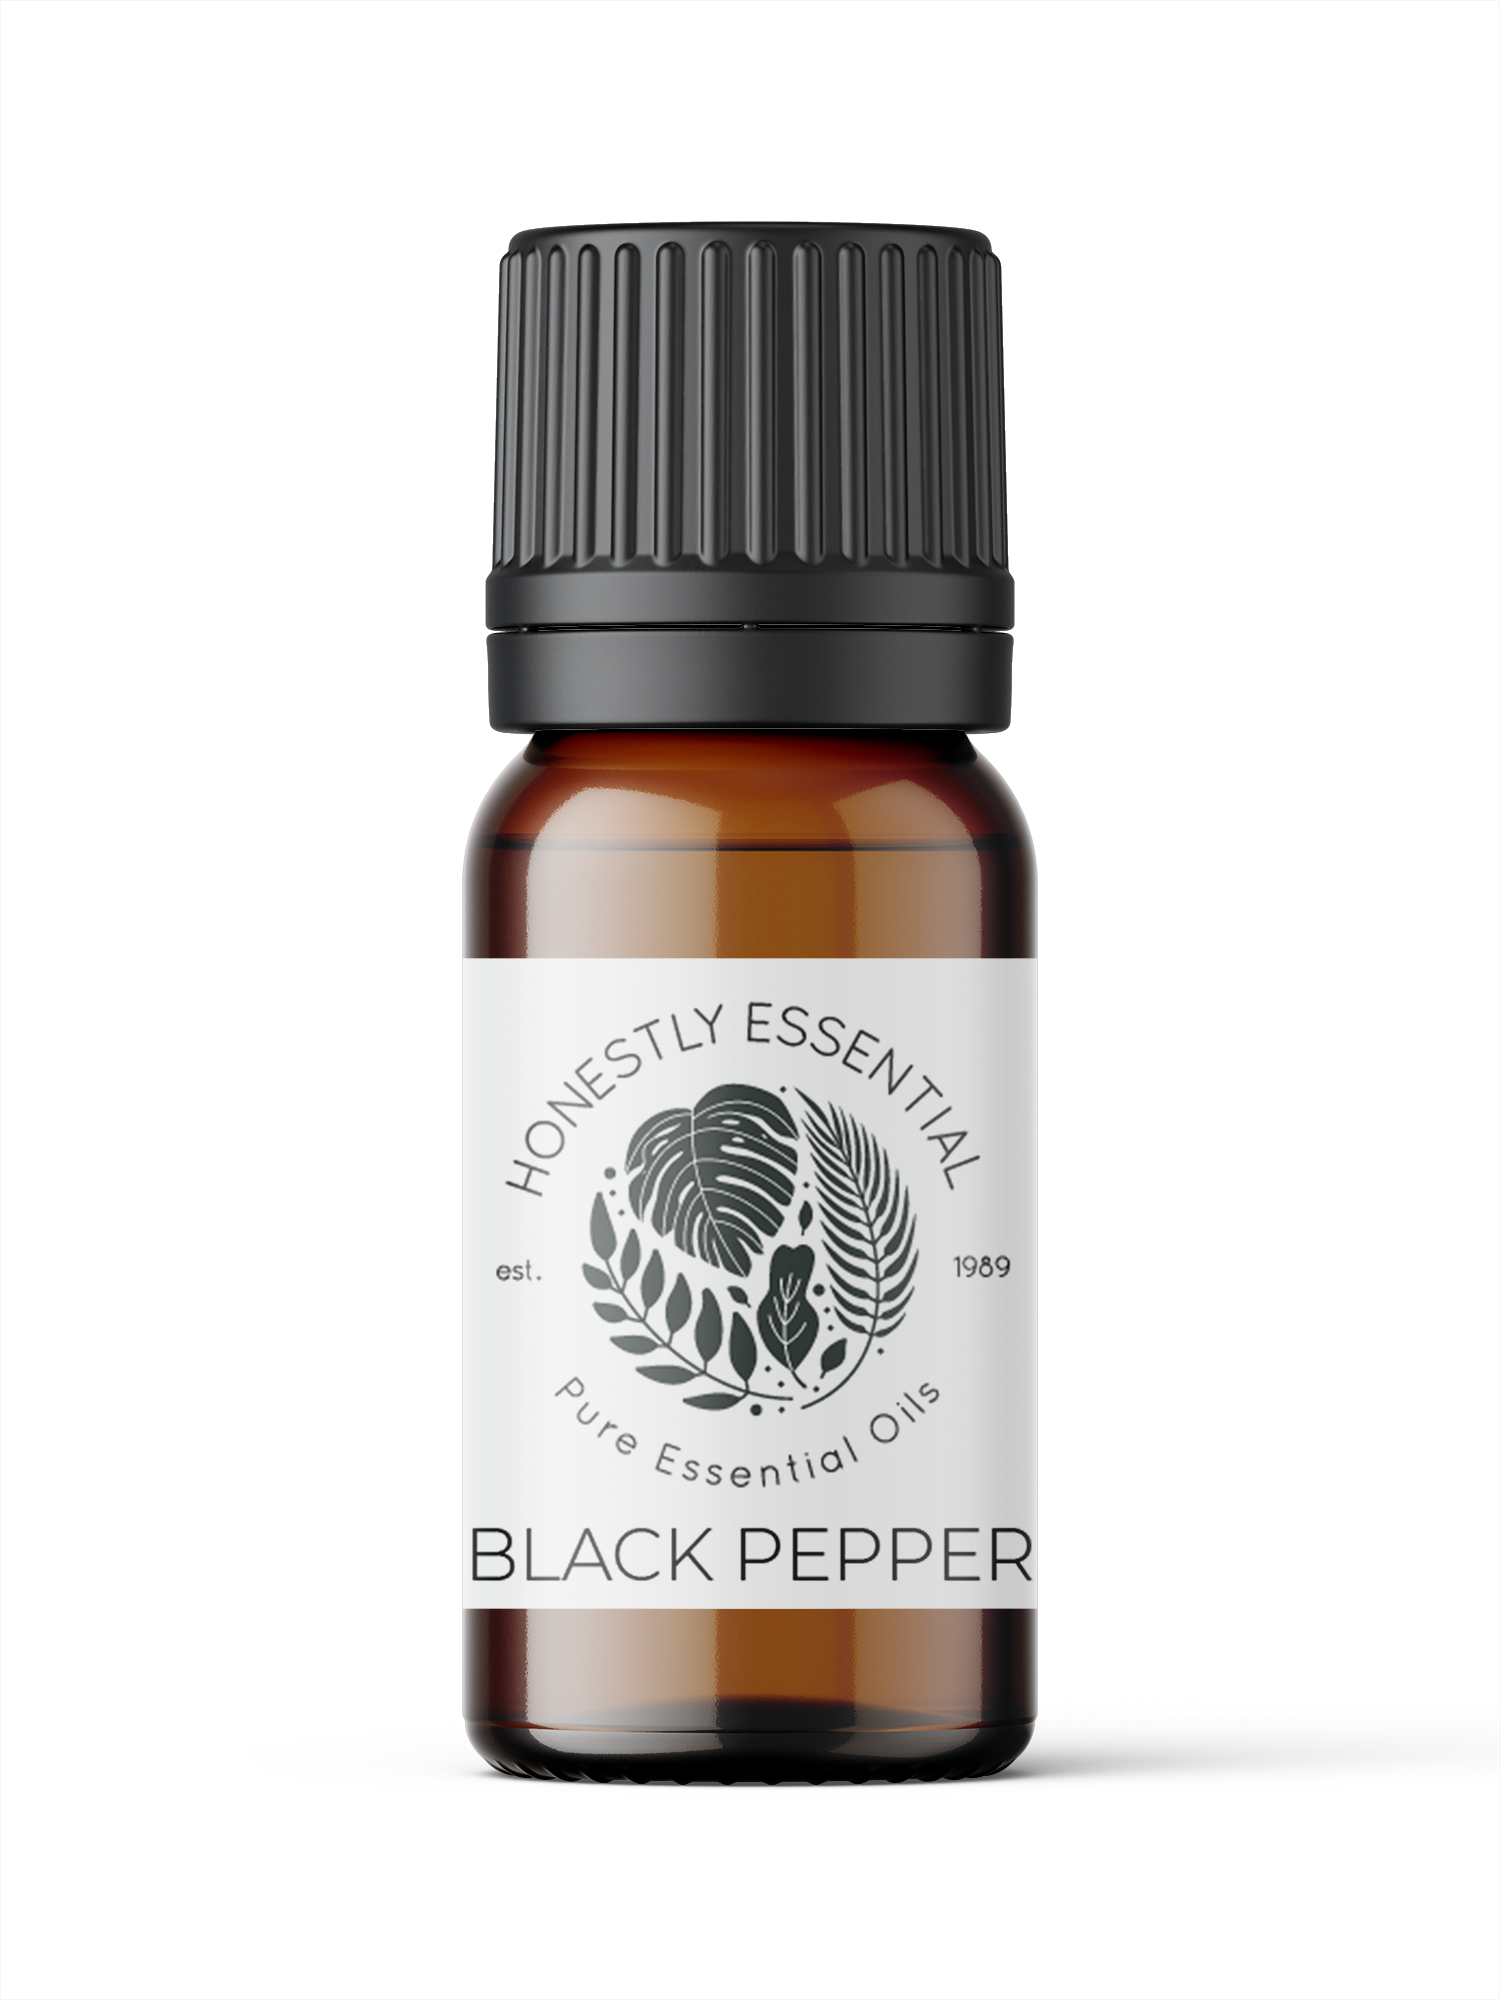 Black Pepper Essential Oil - Essential Oils | Honestly Essential Oils digestion, energy, immunity, pain, pain reliever, spice, spice essential oil, spices